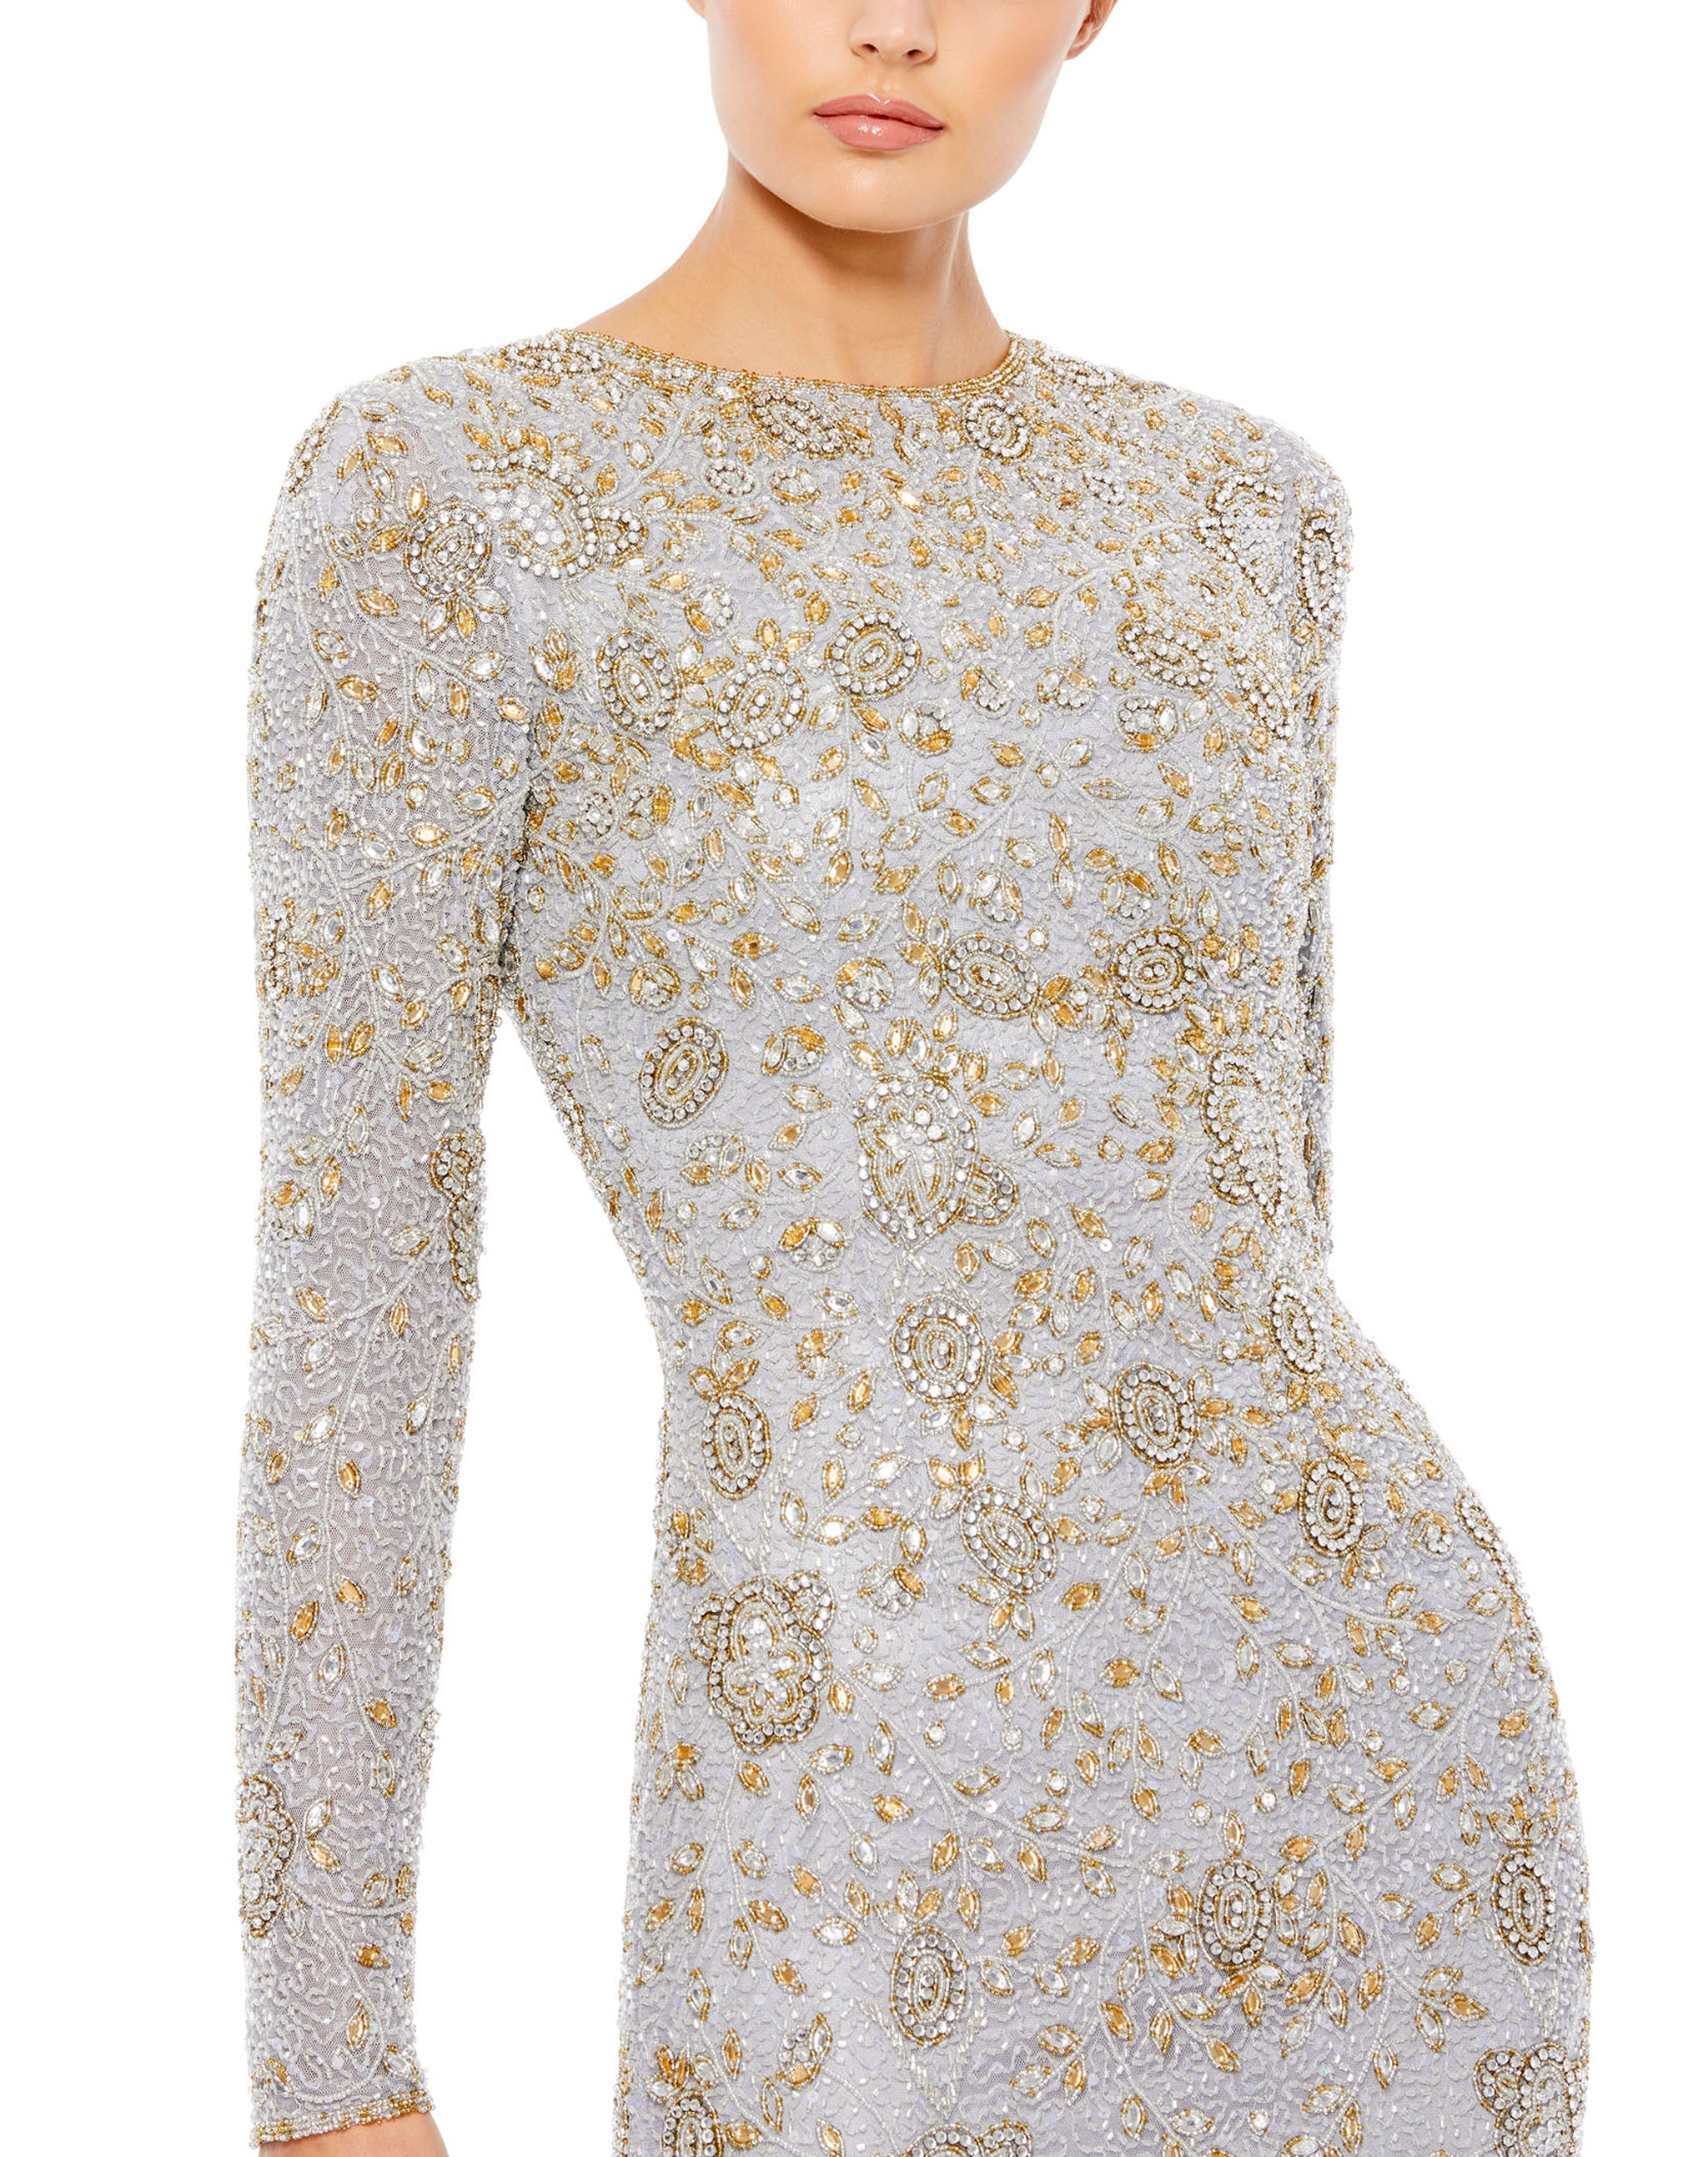 Jewel Neck Long Sleeve Embellished Gown